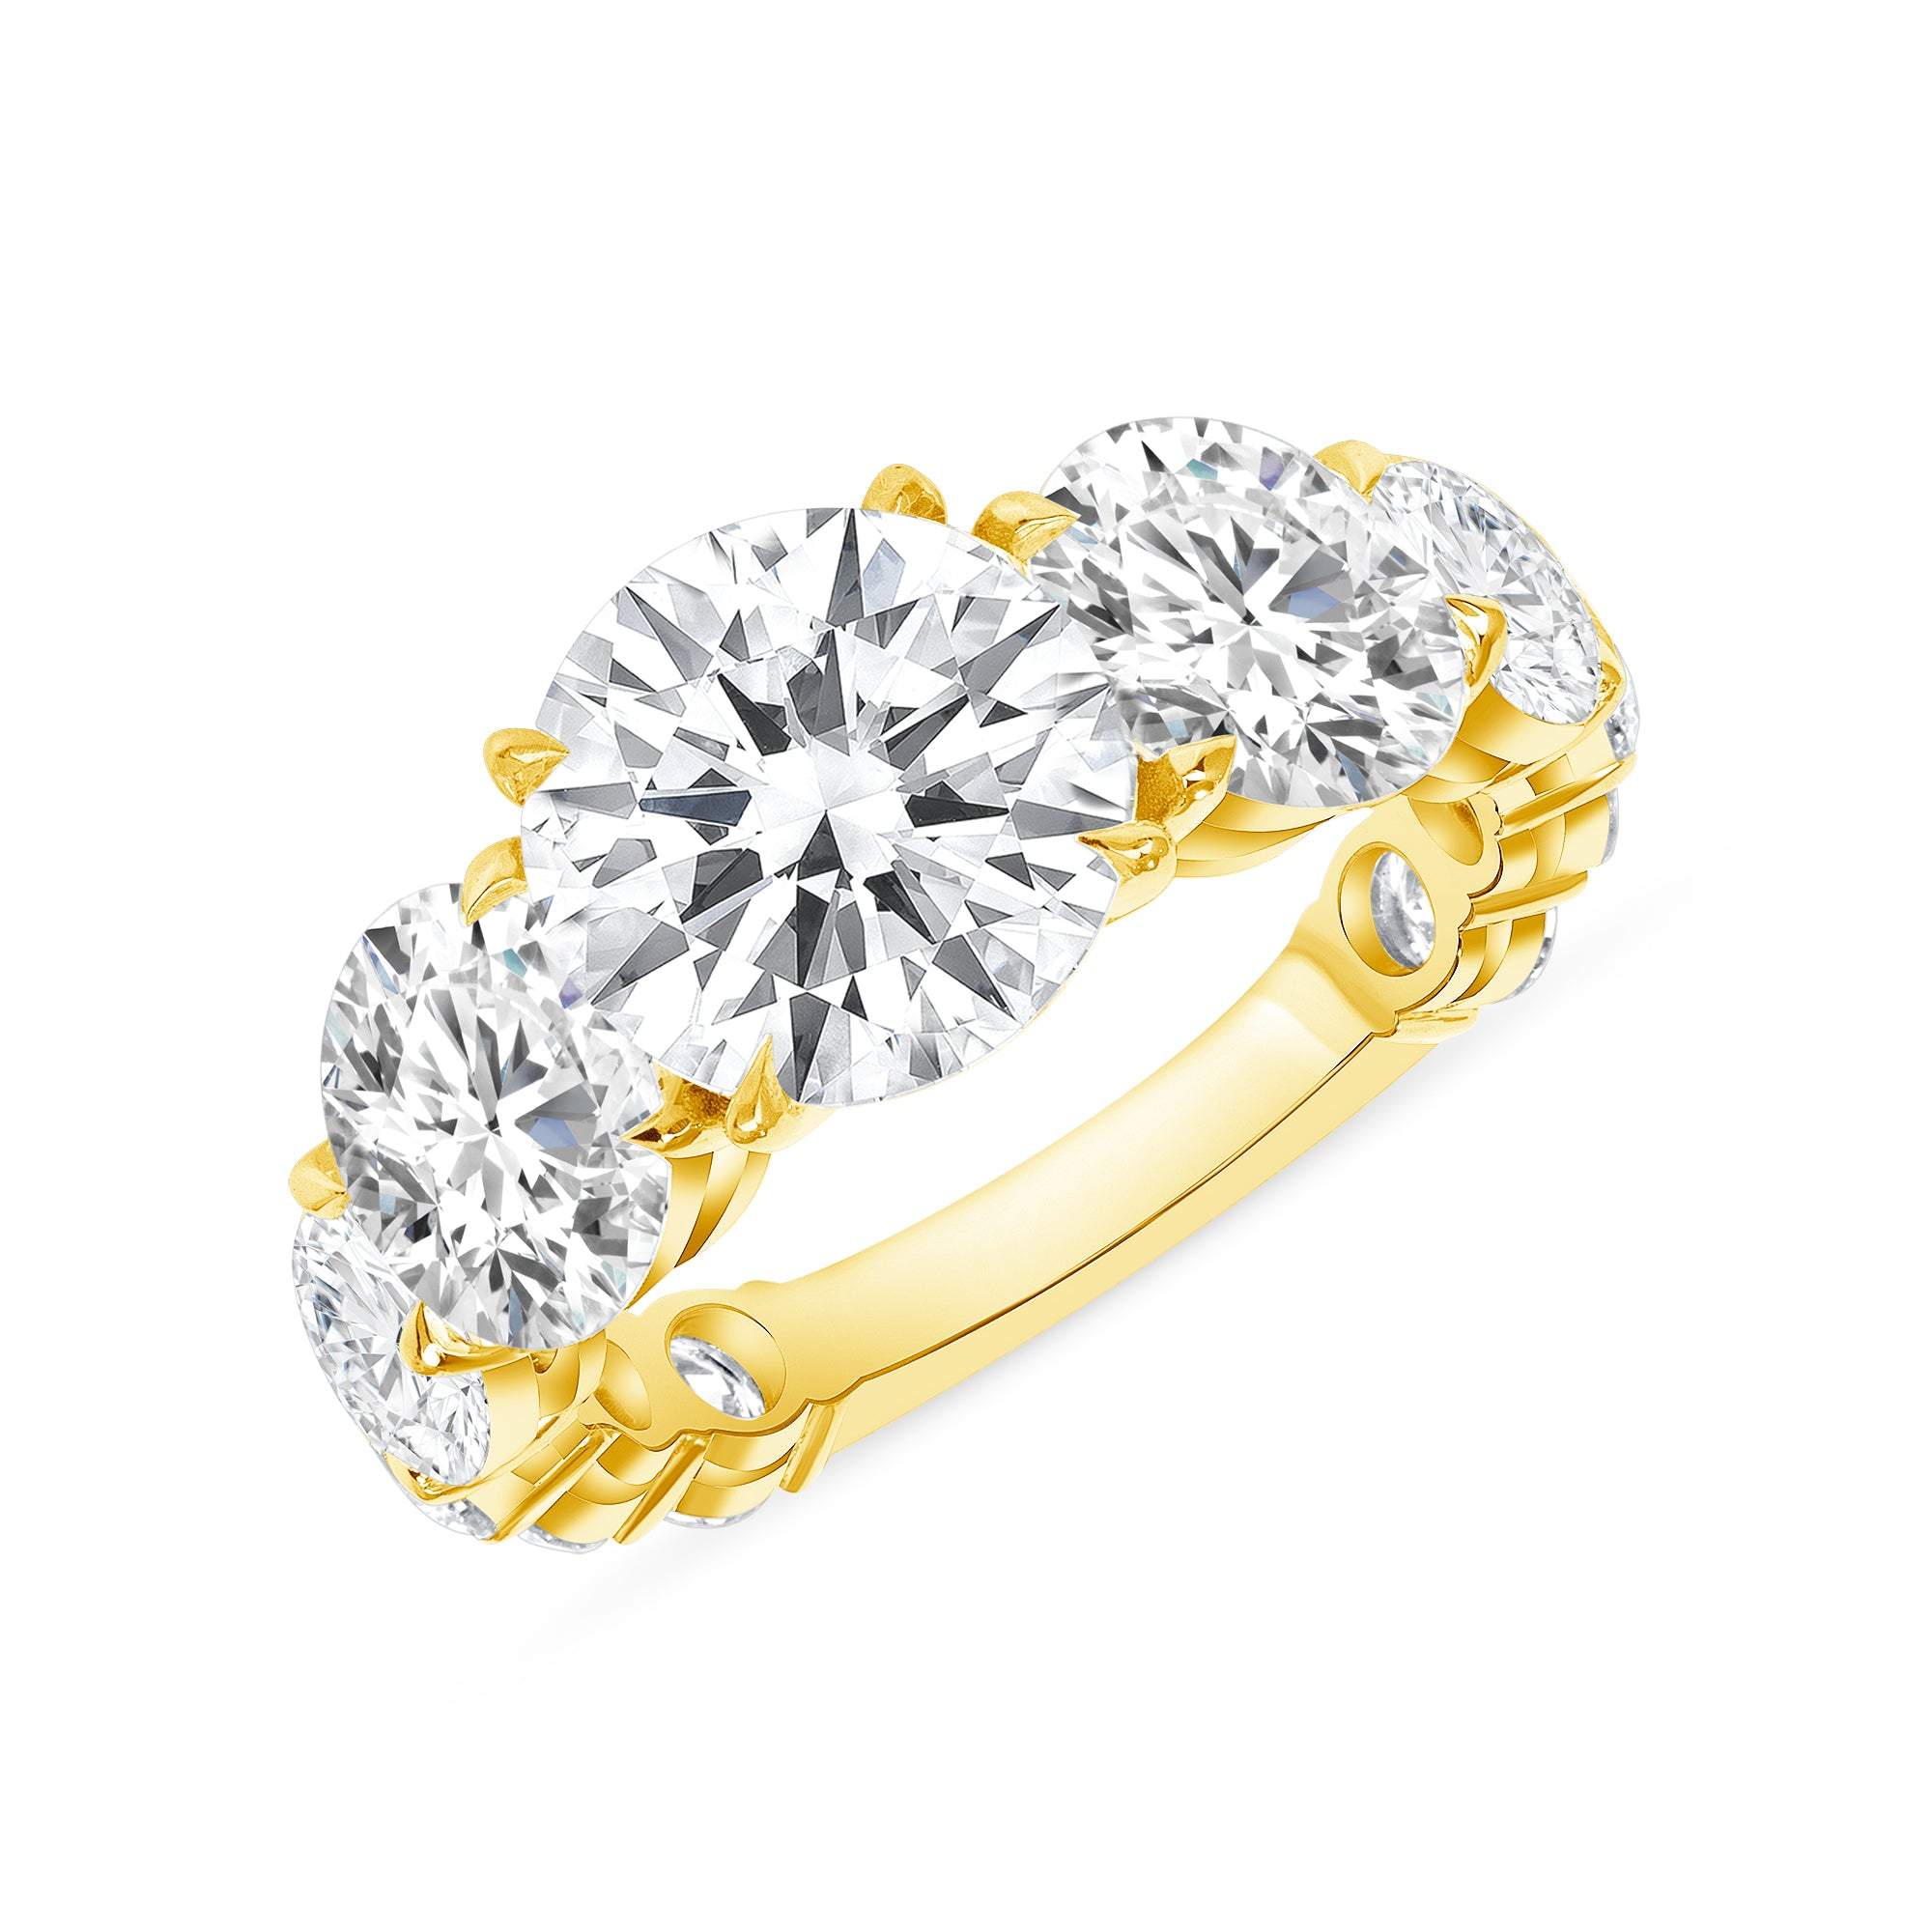 11 Stone Round Brilliant Cut Diamond Ring in 18k Yellow Gold Band